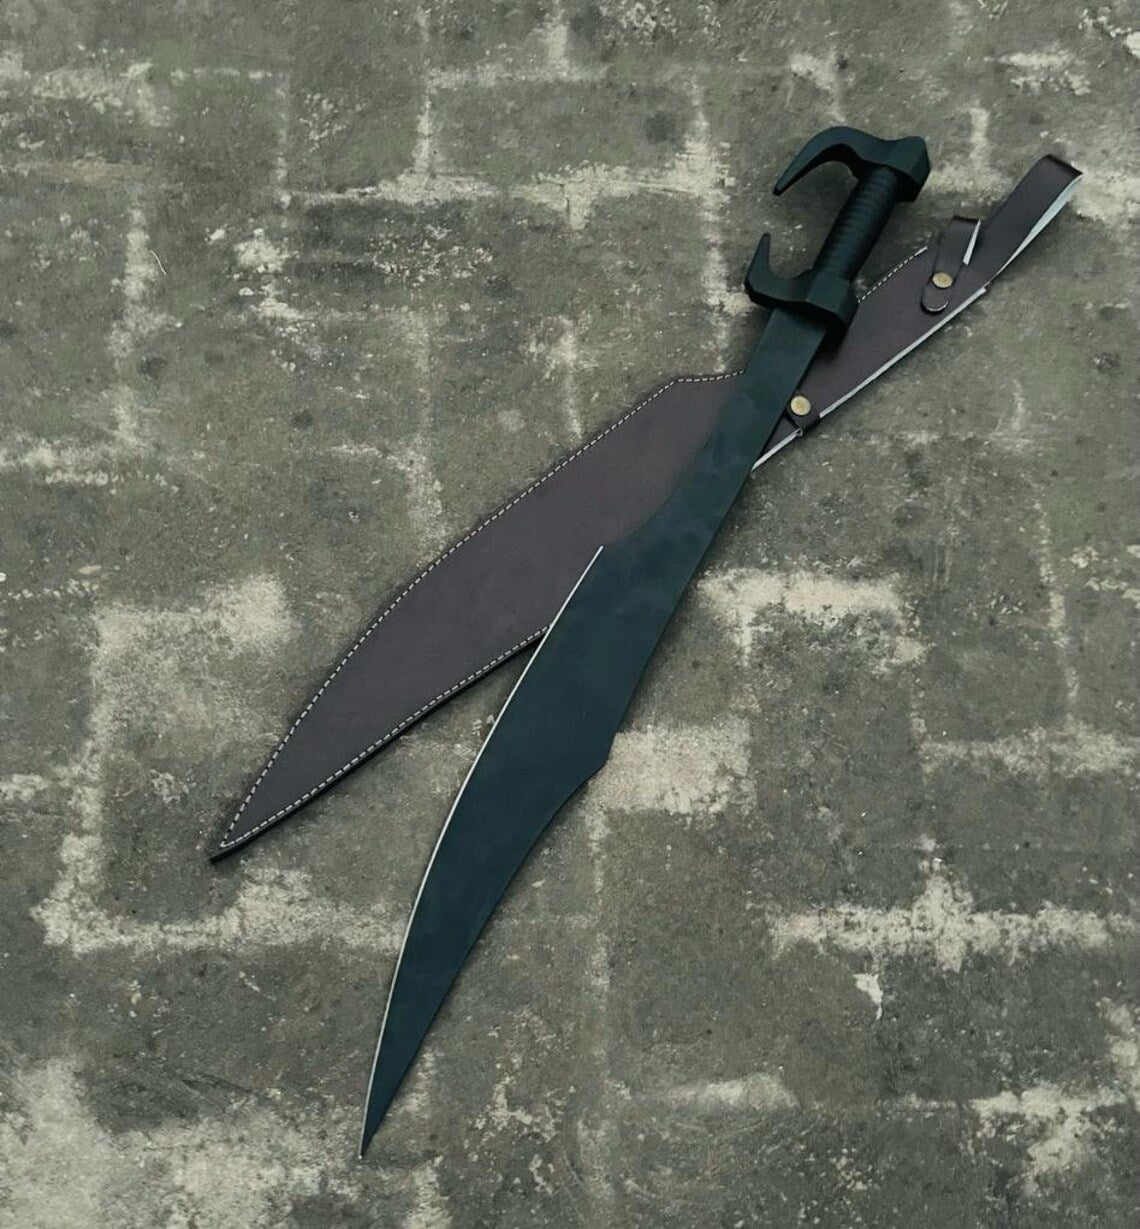 Spartan King Replica Sword- Ancient Sword, Hand Forged Carbon Steel Black powder Coated Blade - Greek Combat Sword